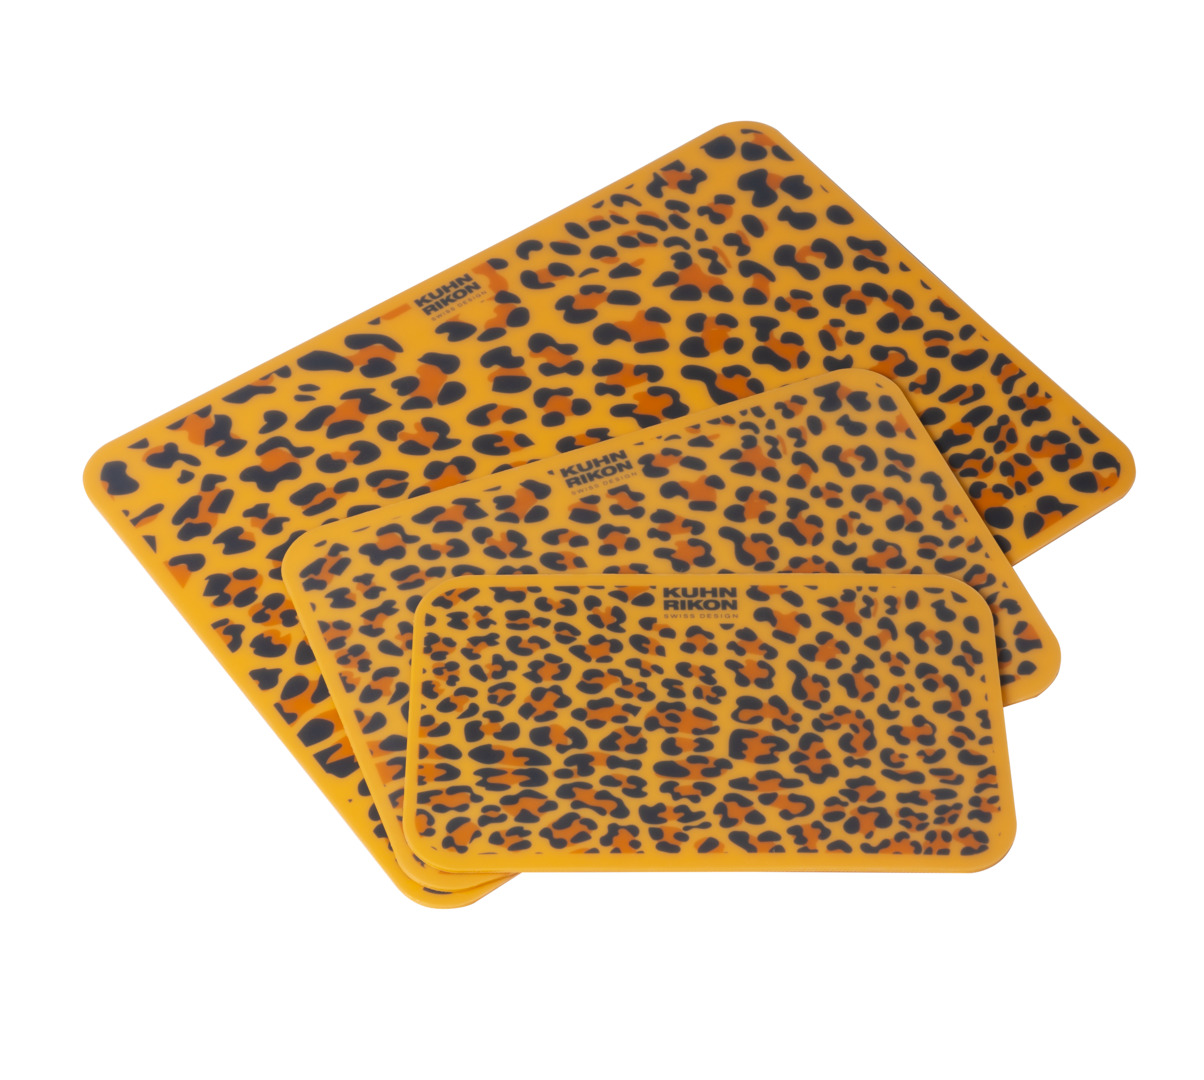 Kuhn Rikon - Colori+ Patterned Cutting Board 3pc Set Leopard